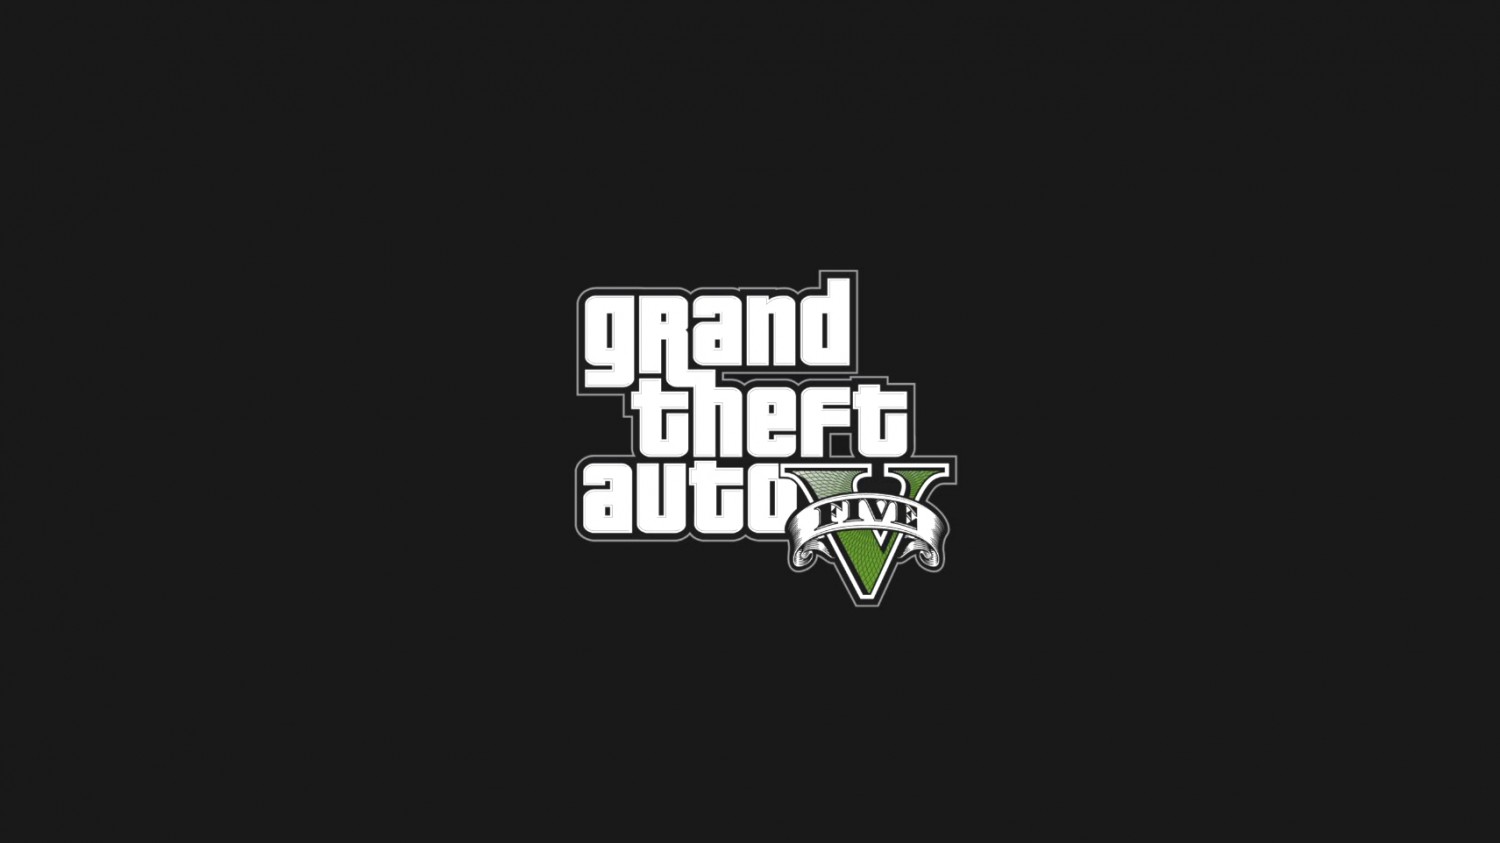 Grand Theft Auto V бесплатно в Epic Games Store!